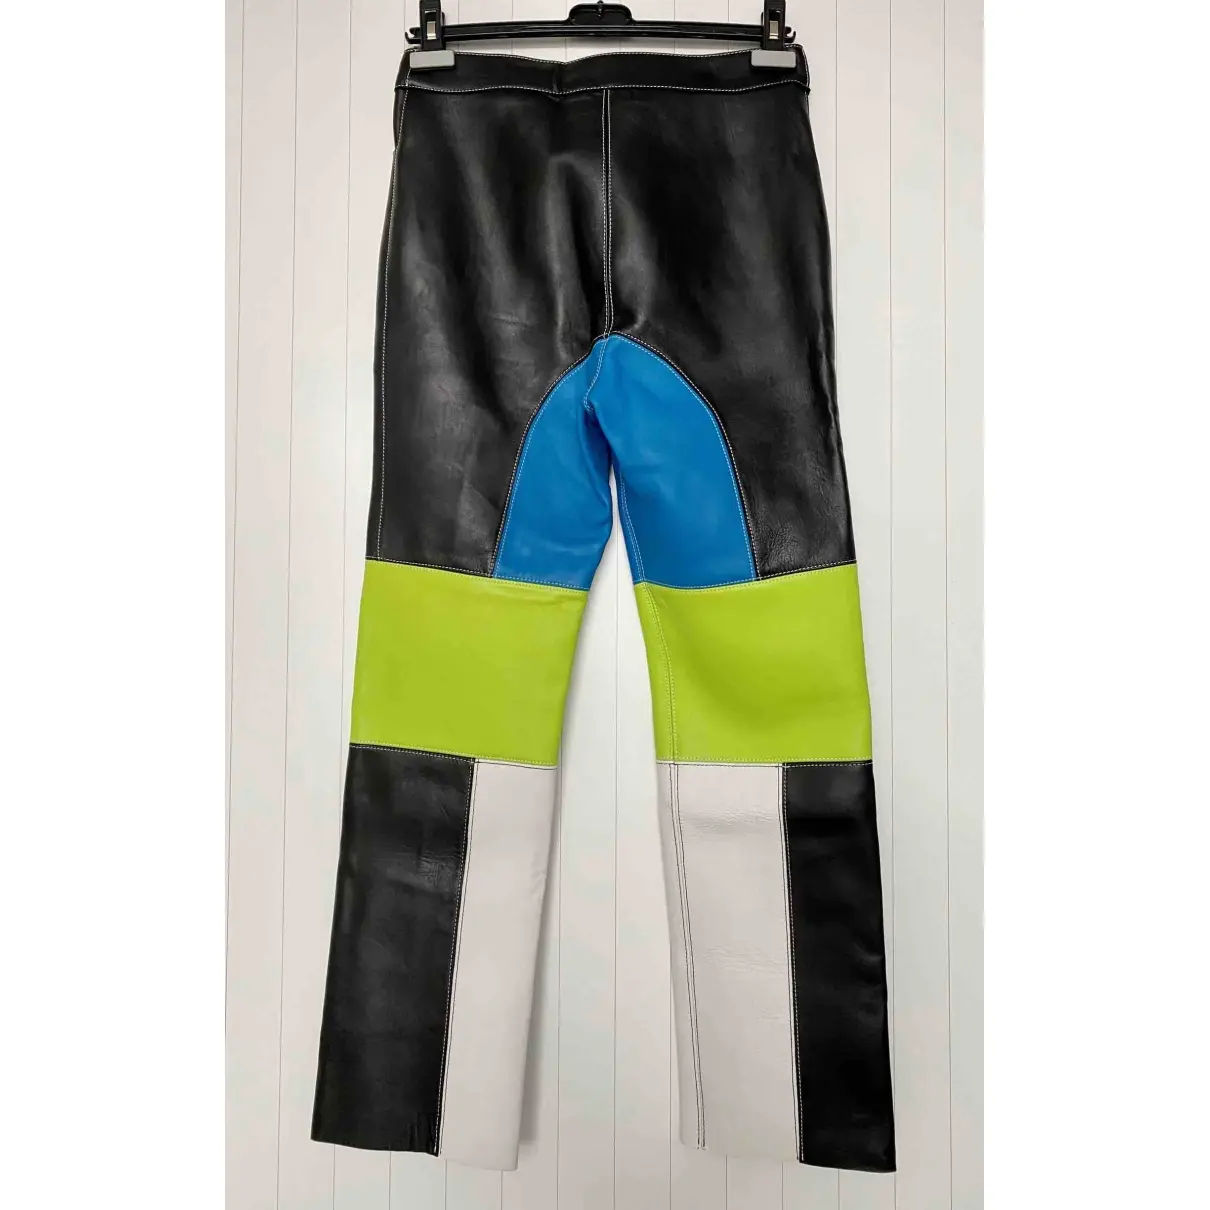 Buy Kirin Leather straight pants online